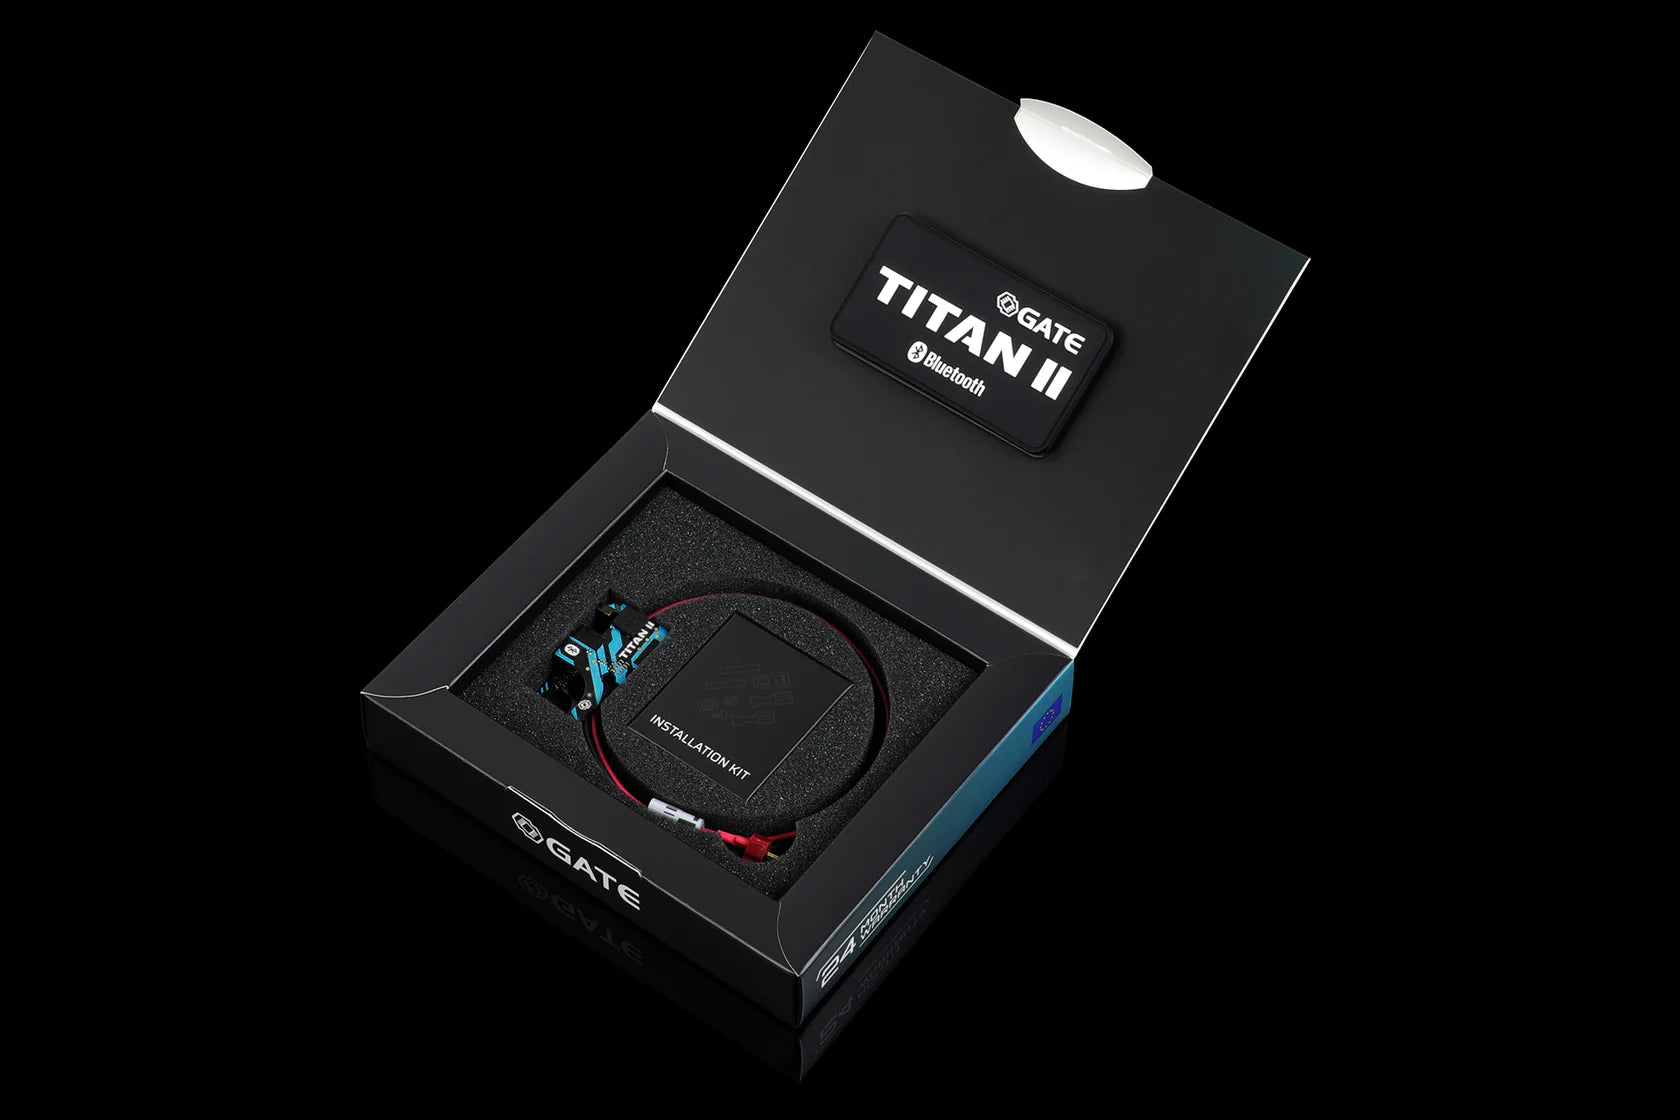 Caja de cambios empotrable TITAN II Bluetooth® EXPERT V2